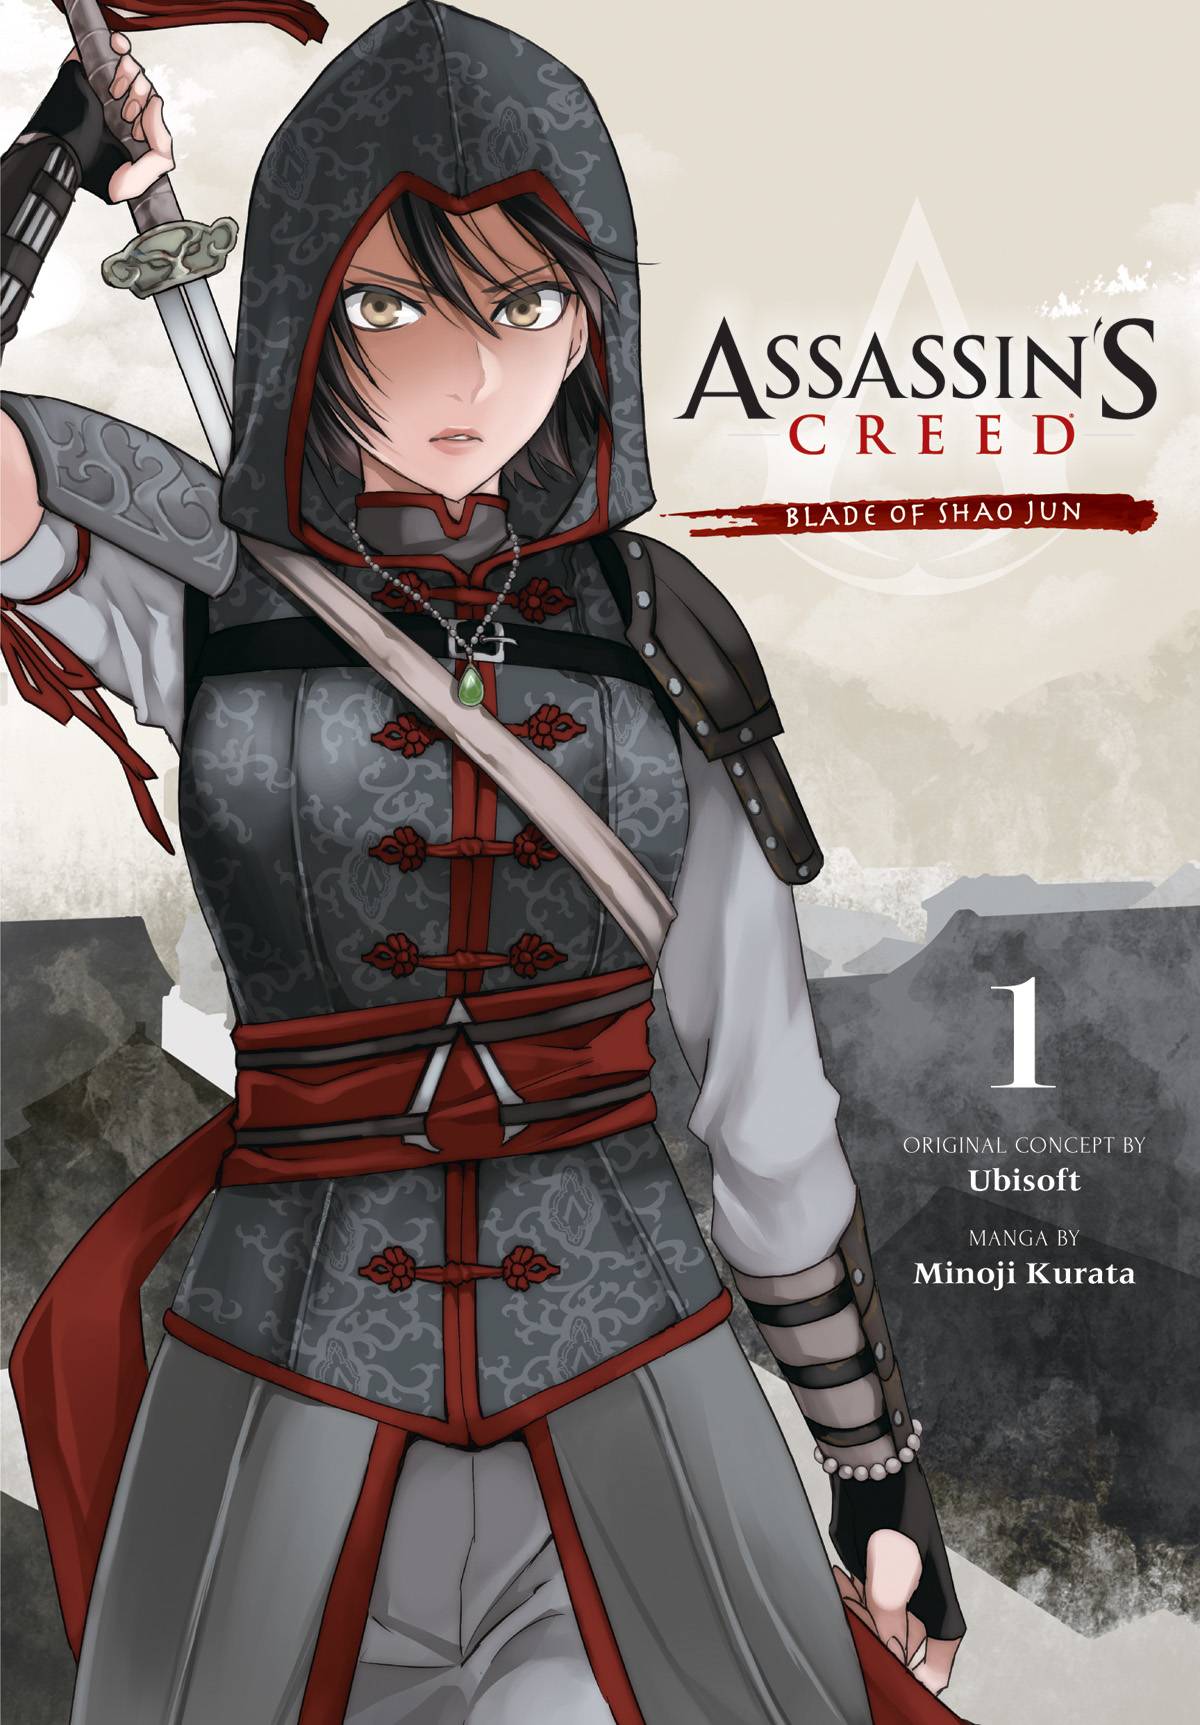 Assassin's Creed: Blade of Shao Jun Volume 1